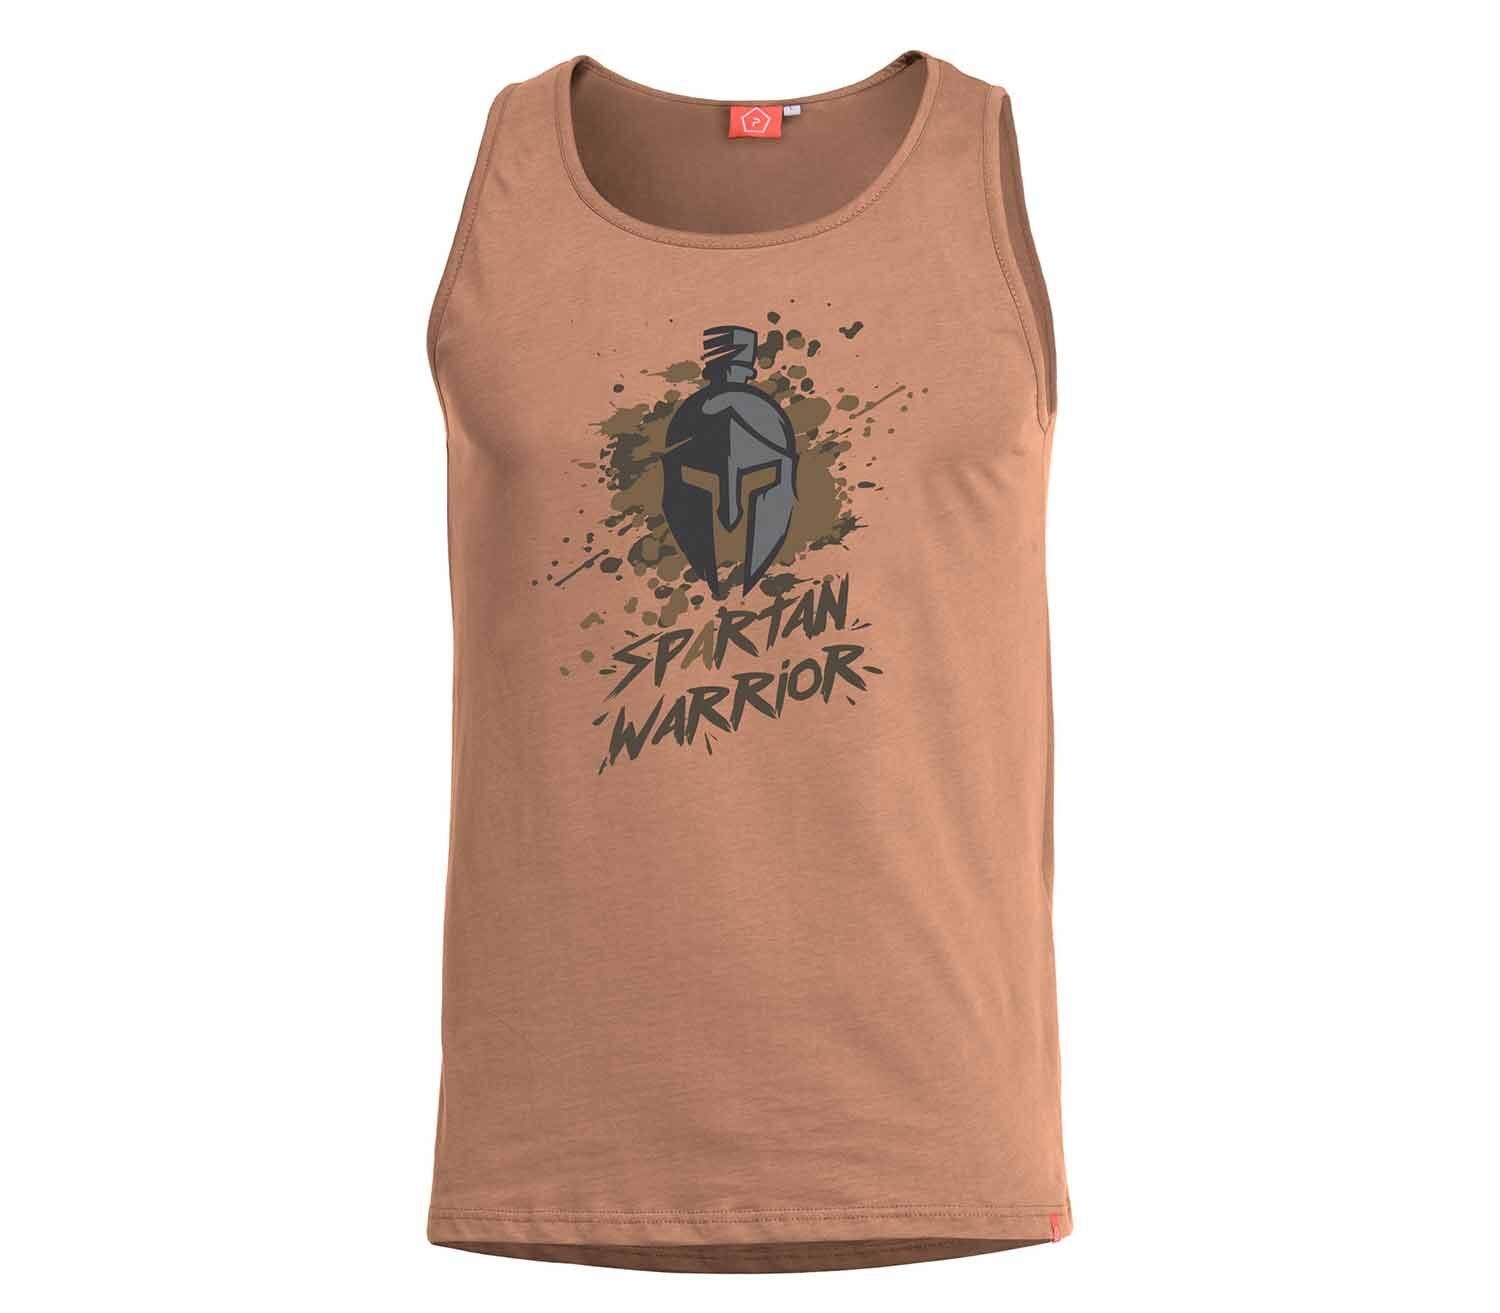 Camiseta-Pentagon-Astir-Spartan-Warrior-Coyote.jpg